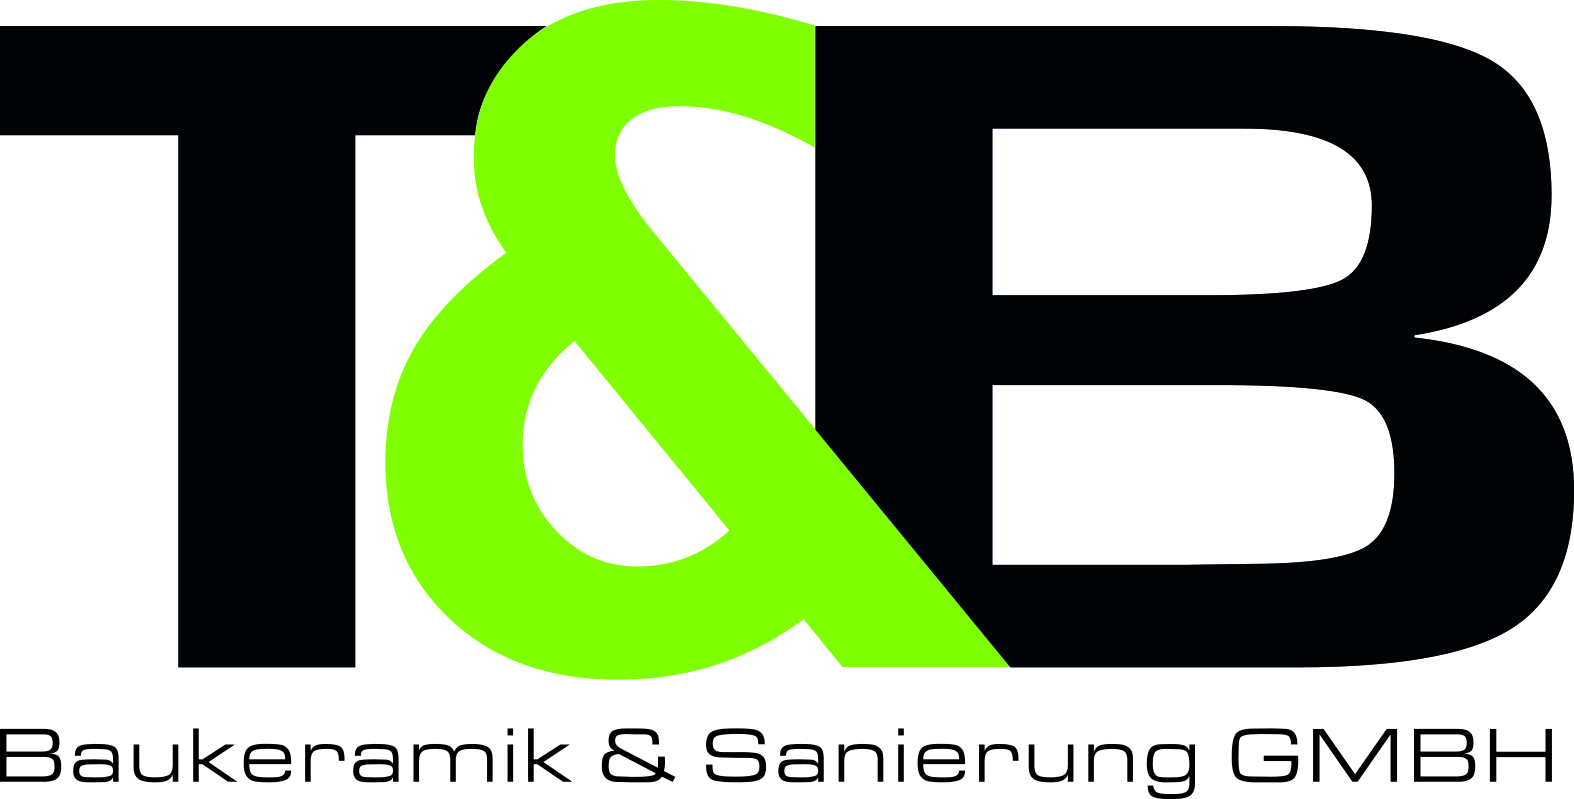 TB Baukeramik & Sanierung GmbH